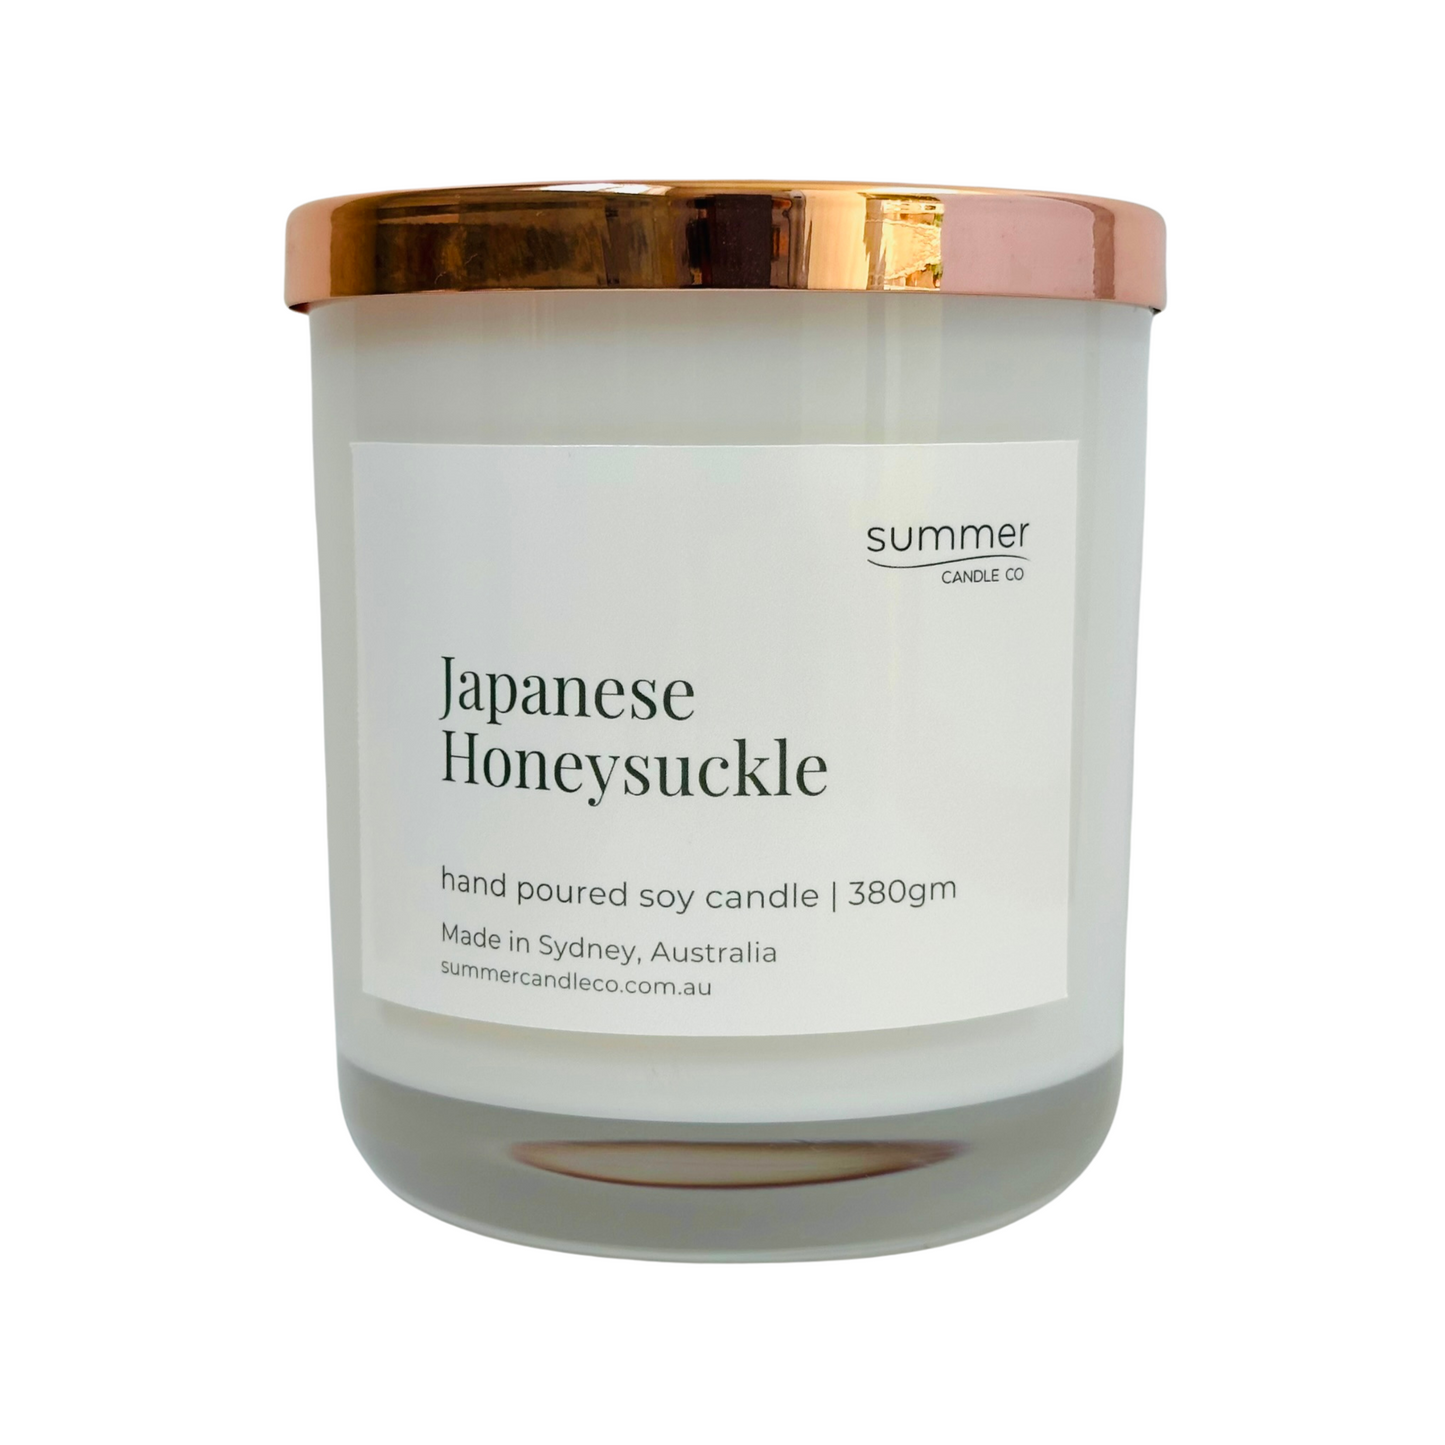 Lovely Hand Poured Soy Candle 380gram Fragrance of Japanese Honeysuckle